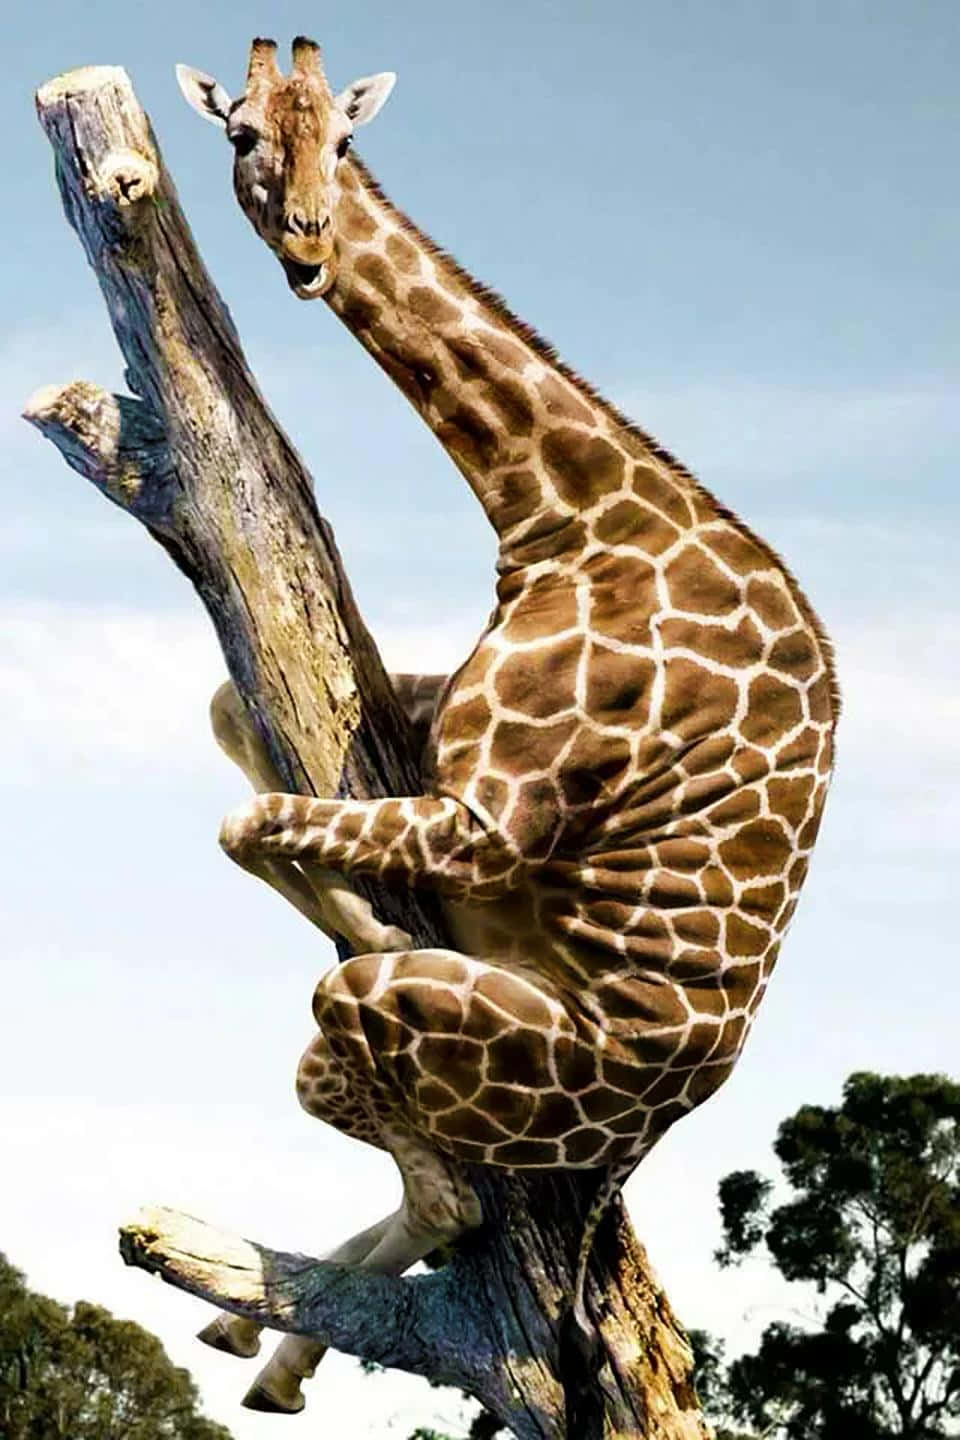 A Giraffe Is Sitting On A Tree Branch